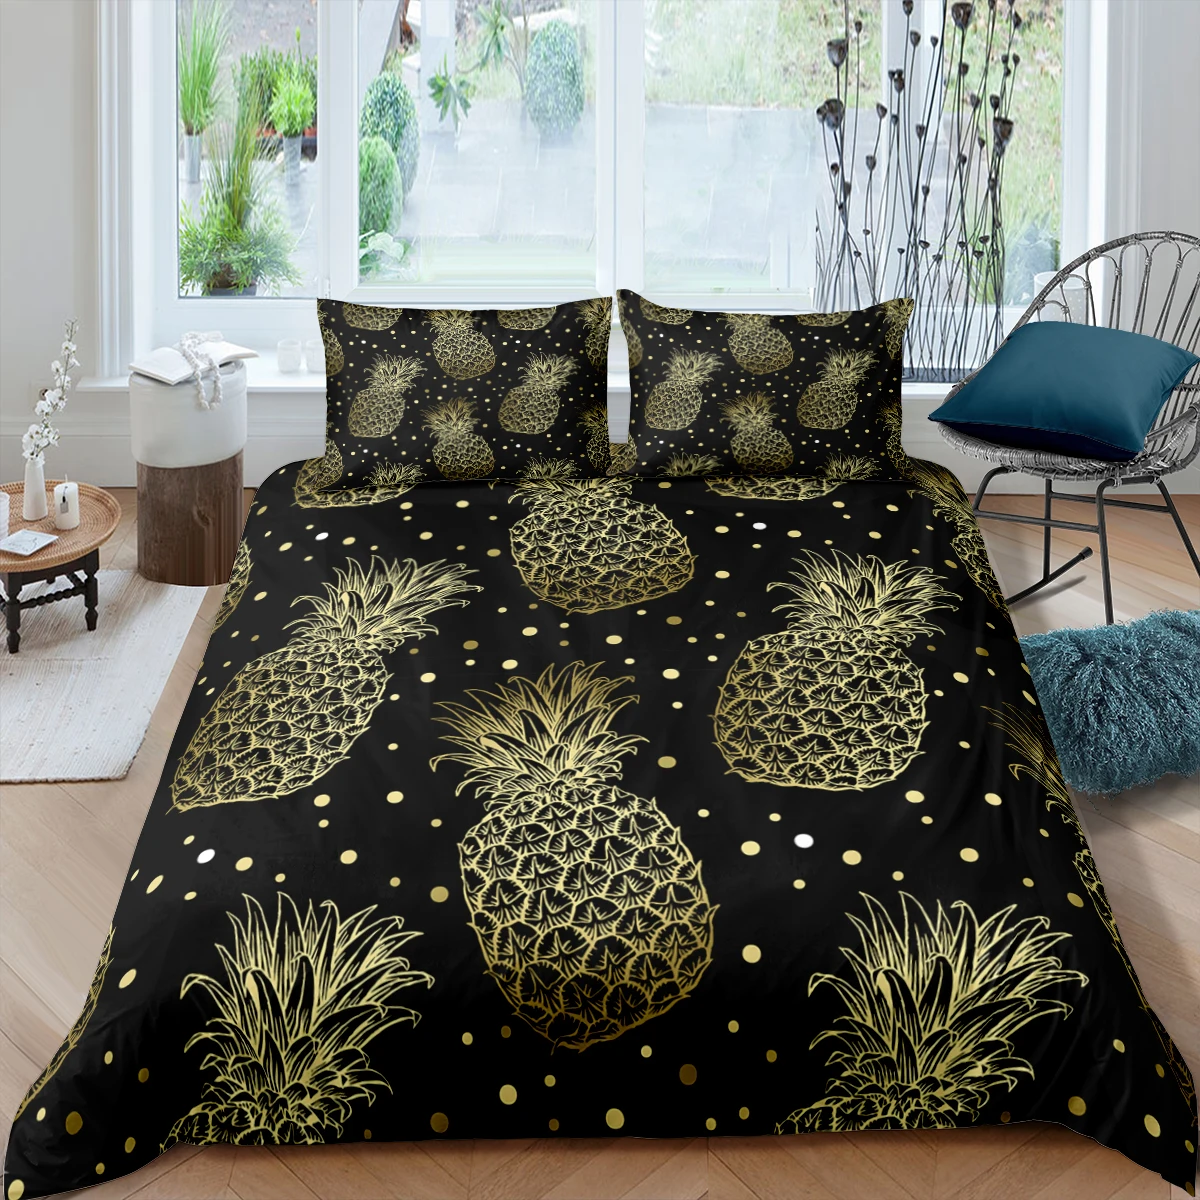 

Home Living Luxury 3D Gold Pineapple Bedding Set Fruit Duvet Cover Pillowcase Queen and King EU/US/AU/UK Size Comforter Bedding